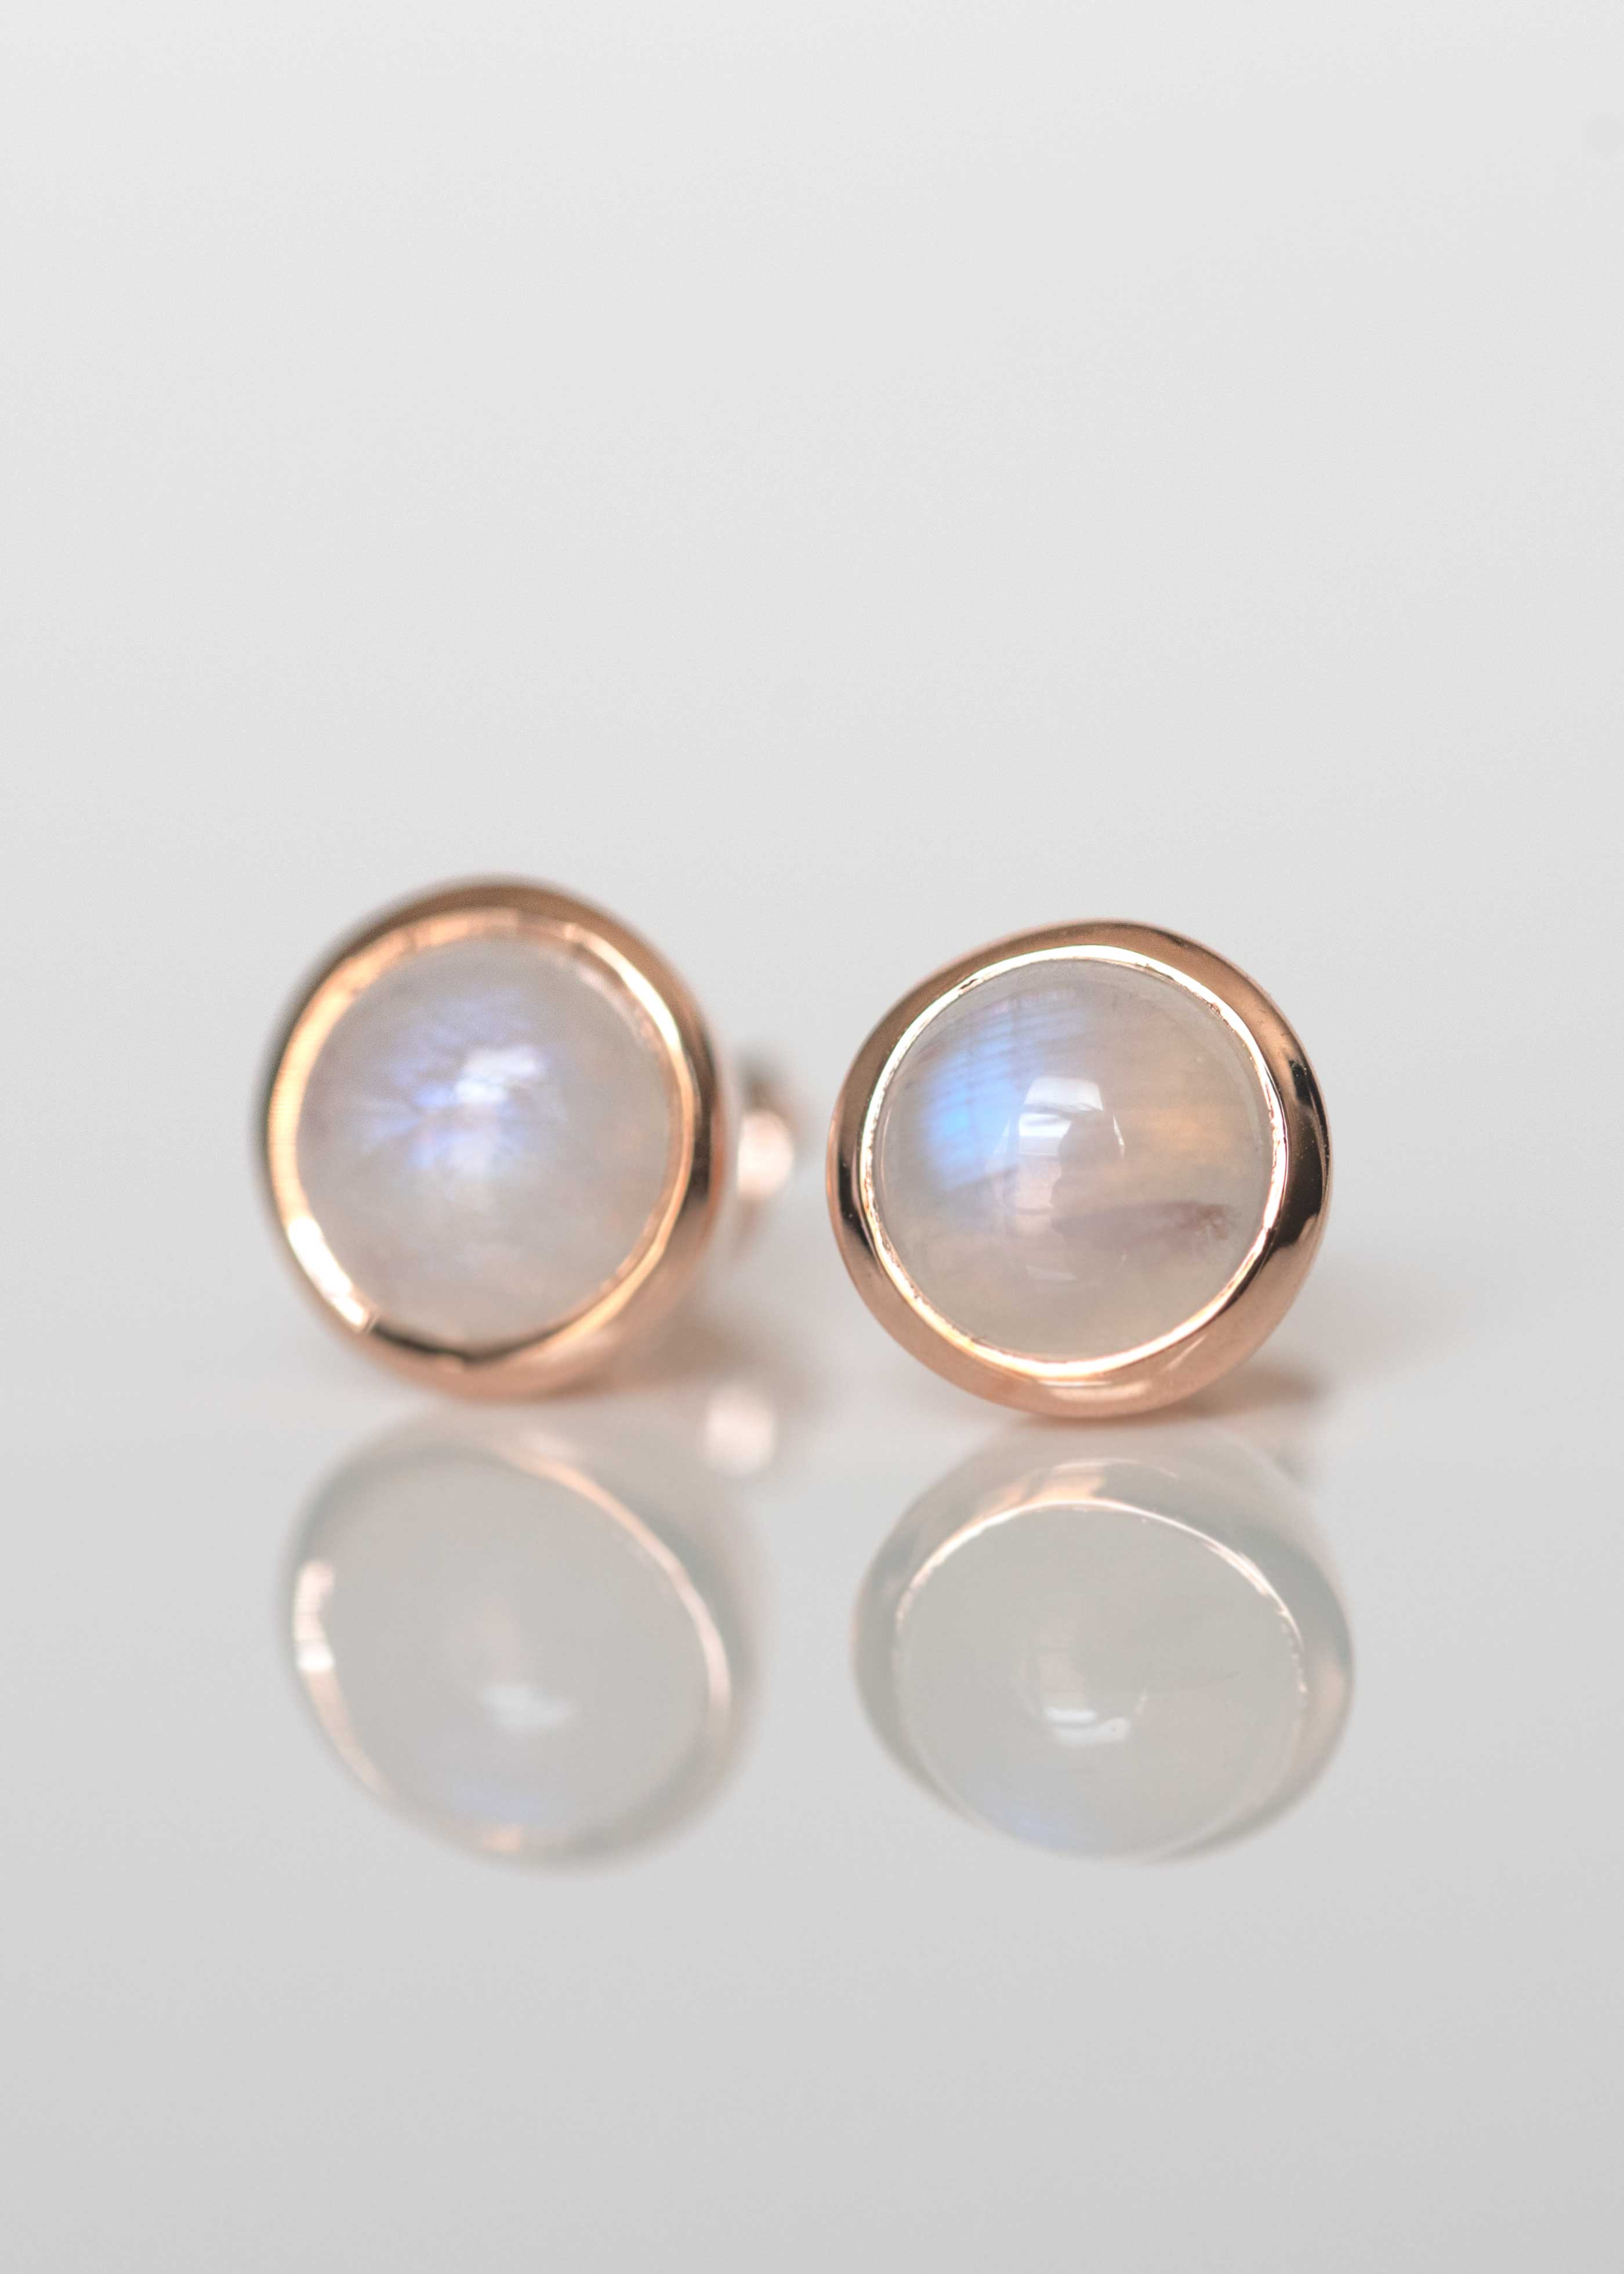 Blue Flash Moonstone Stud Earrings in Rose Gold